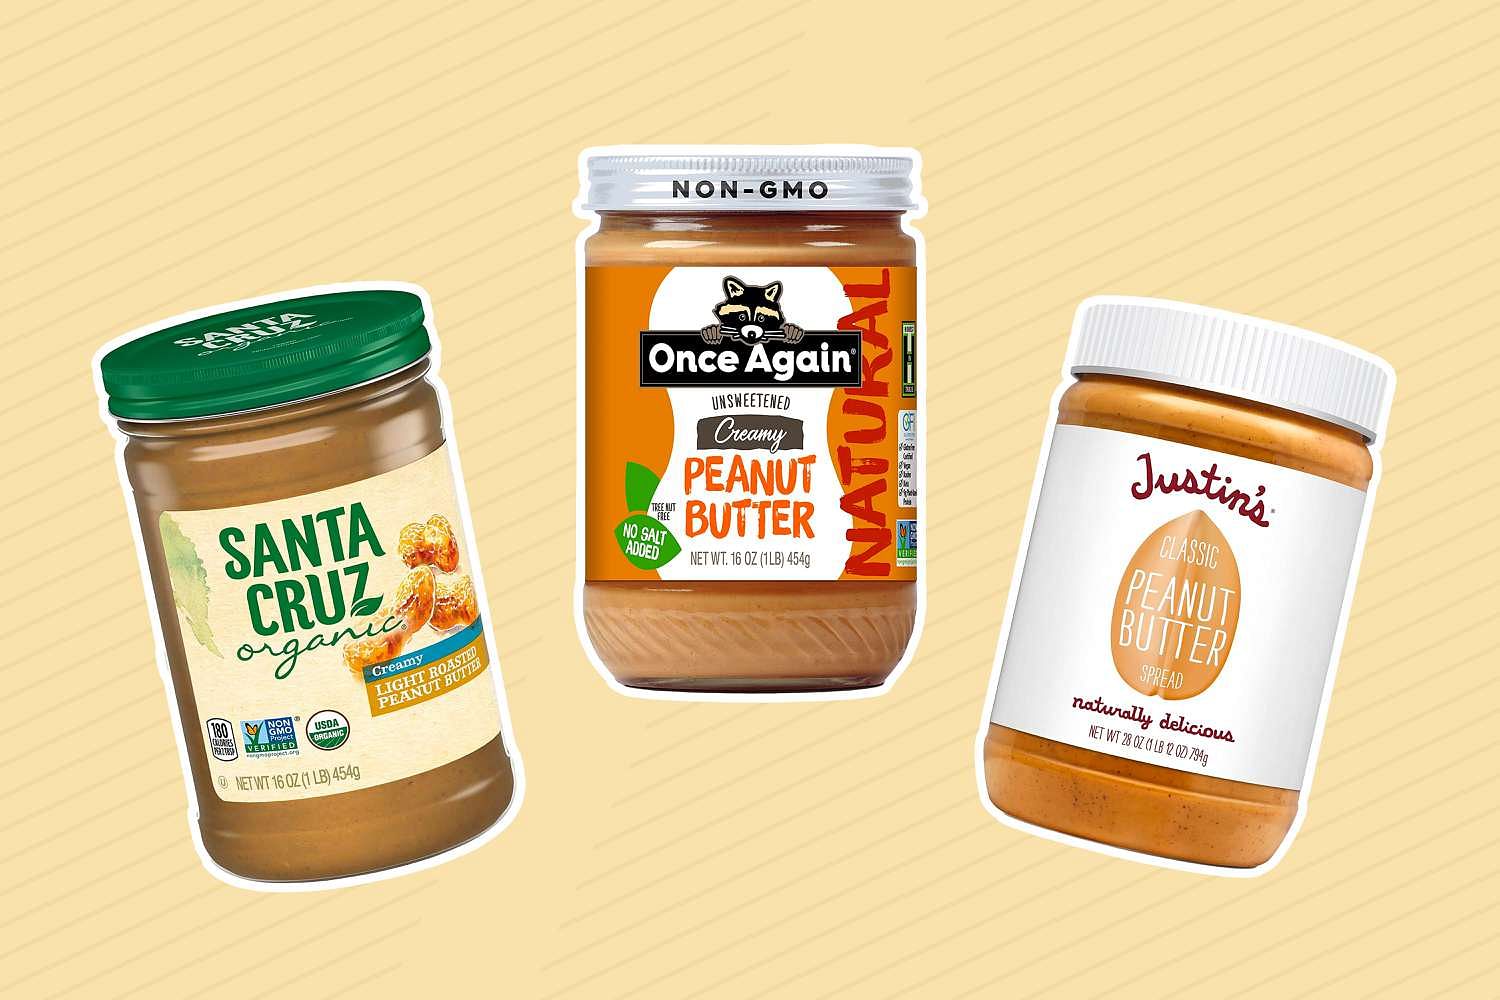 Peanut butter jar with a vegan label